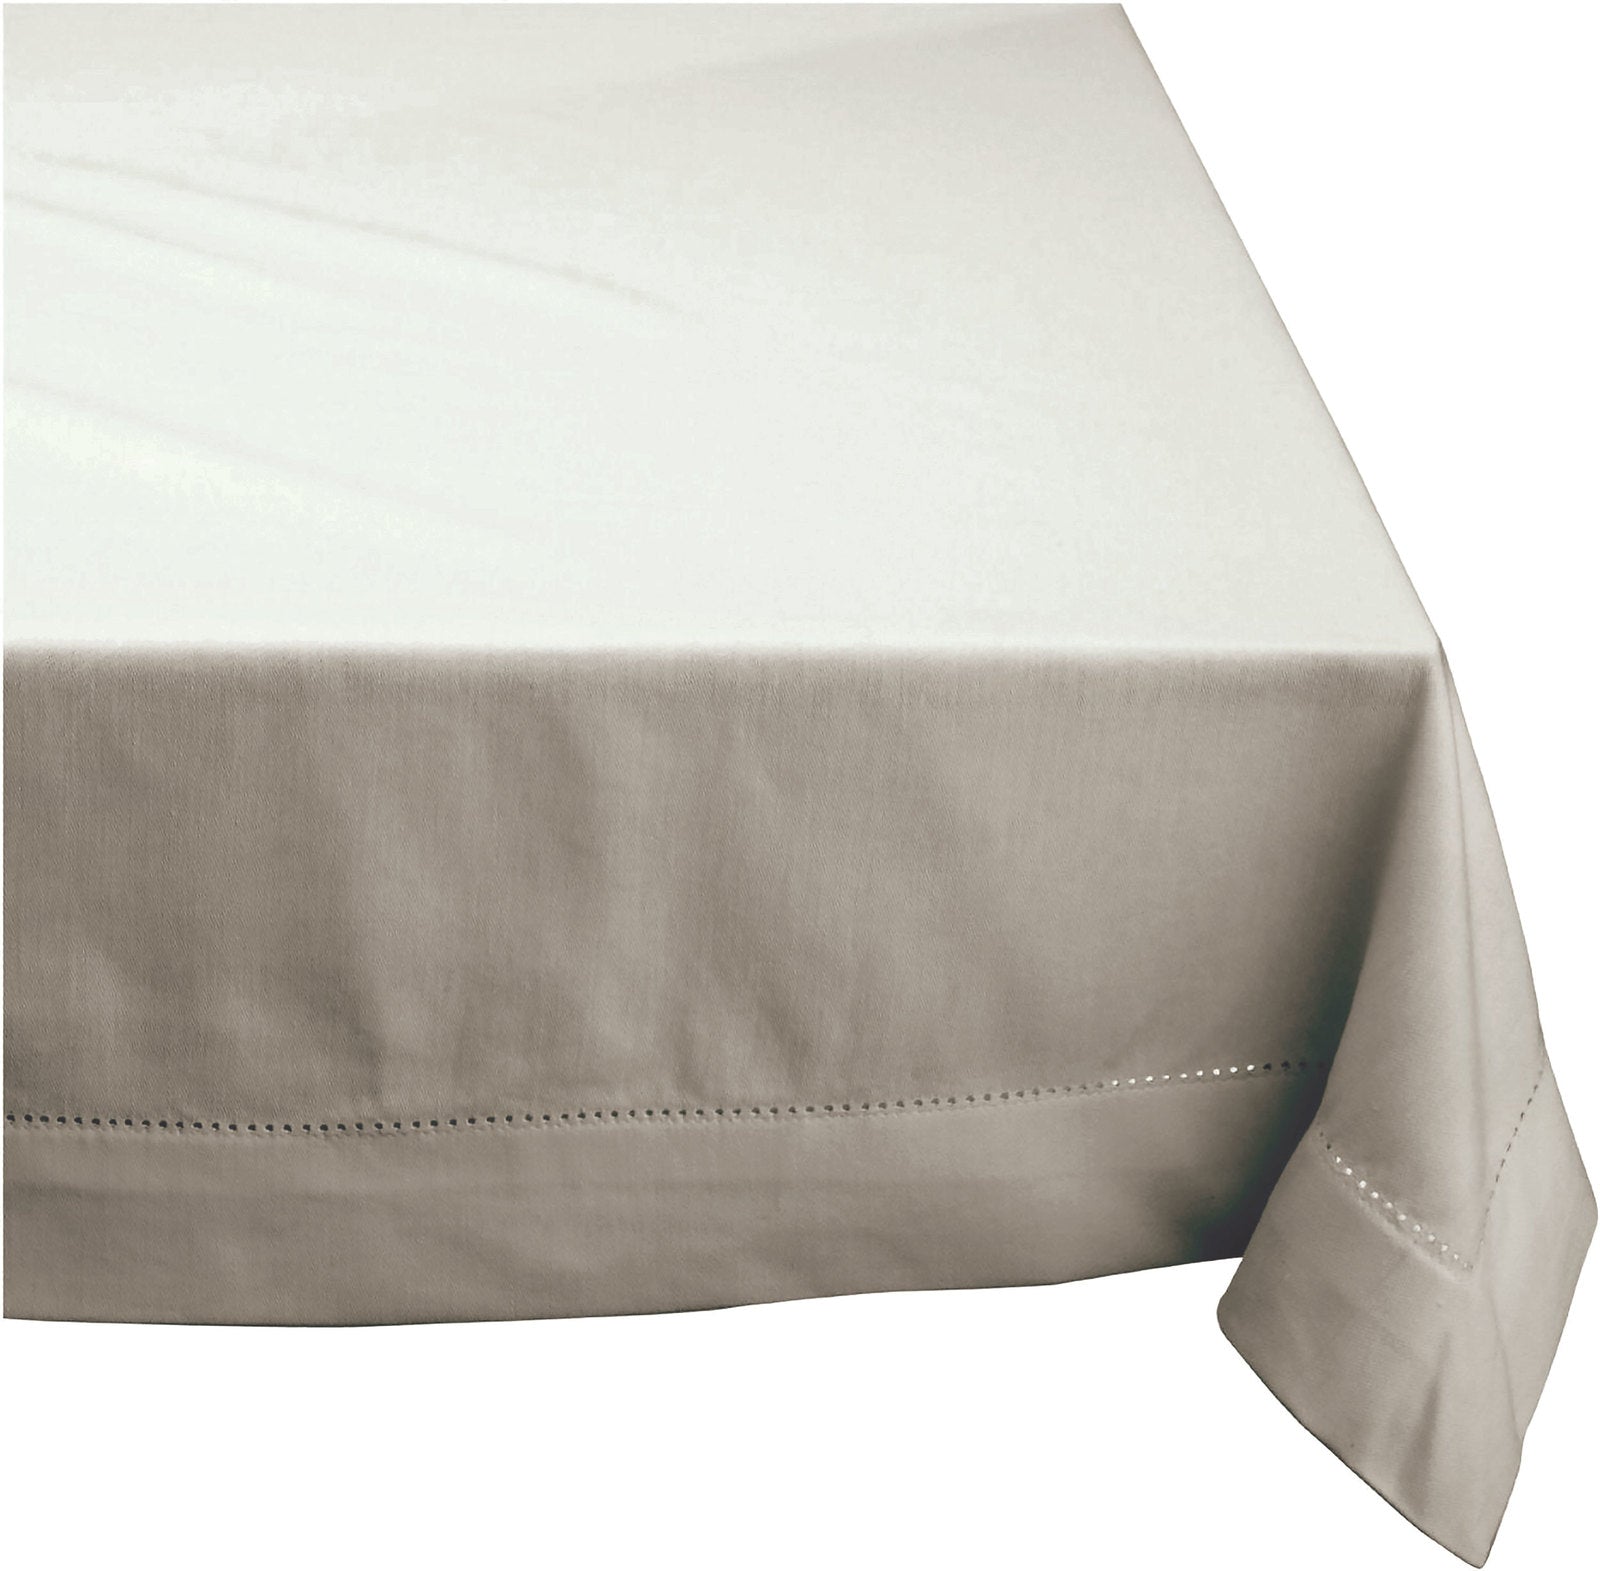 Elegant Hemstitch Tablecloth - 100% Cotton - 130x180cm in Oatmeal